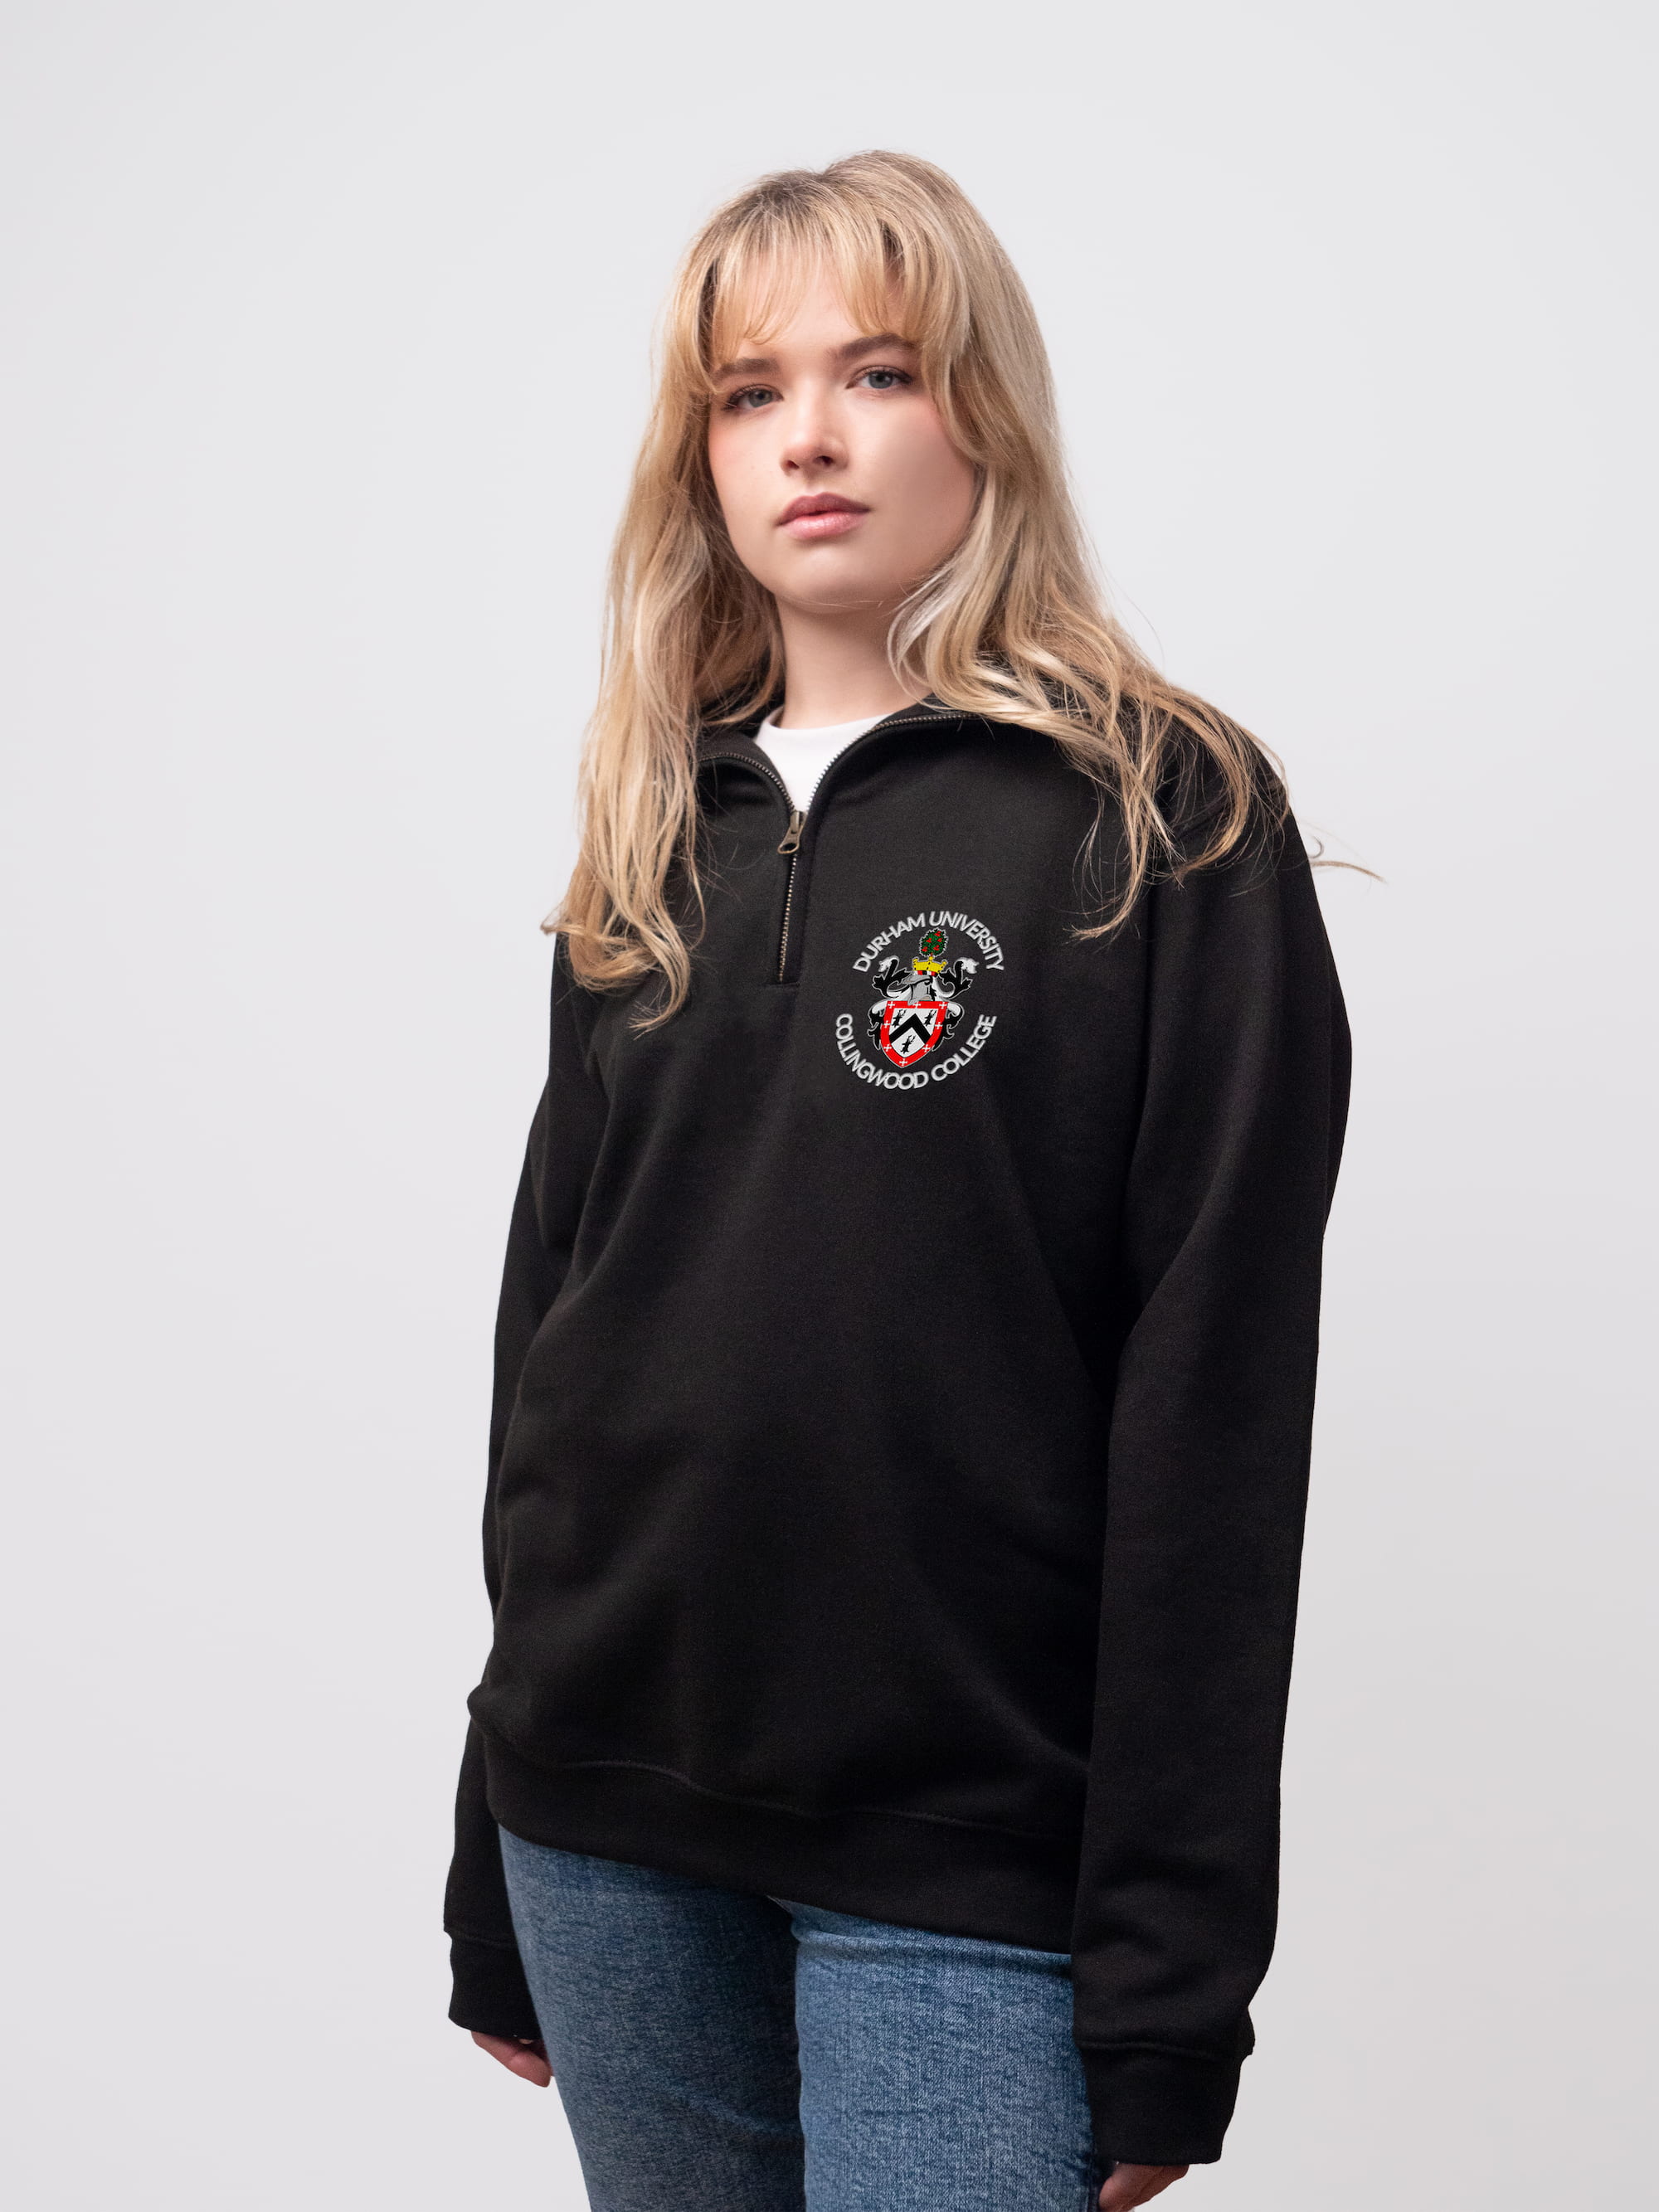 Collingwood student wearing a black 1/4 zip sweatshirt 